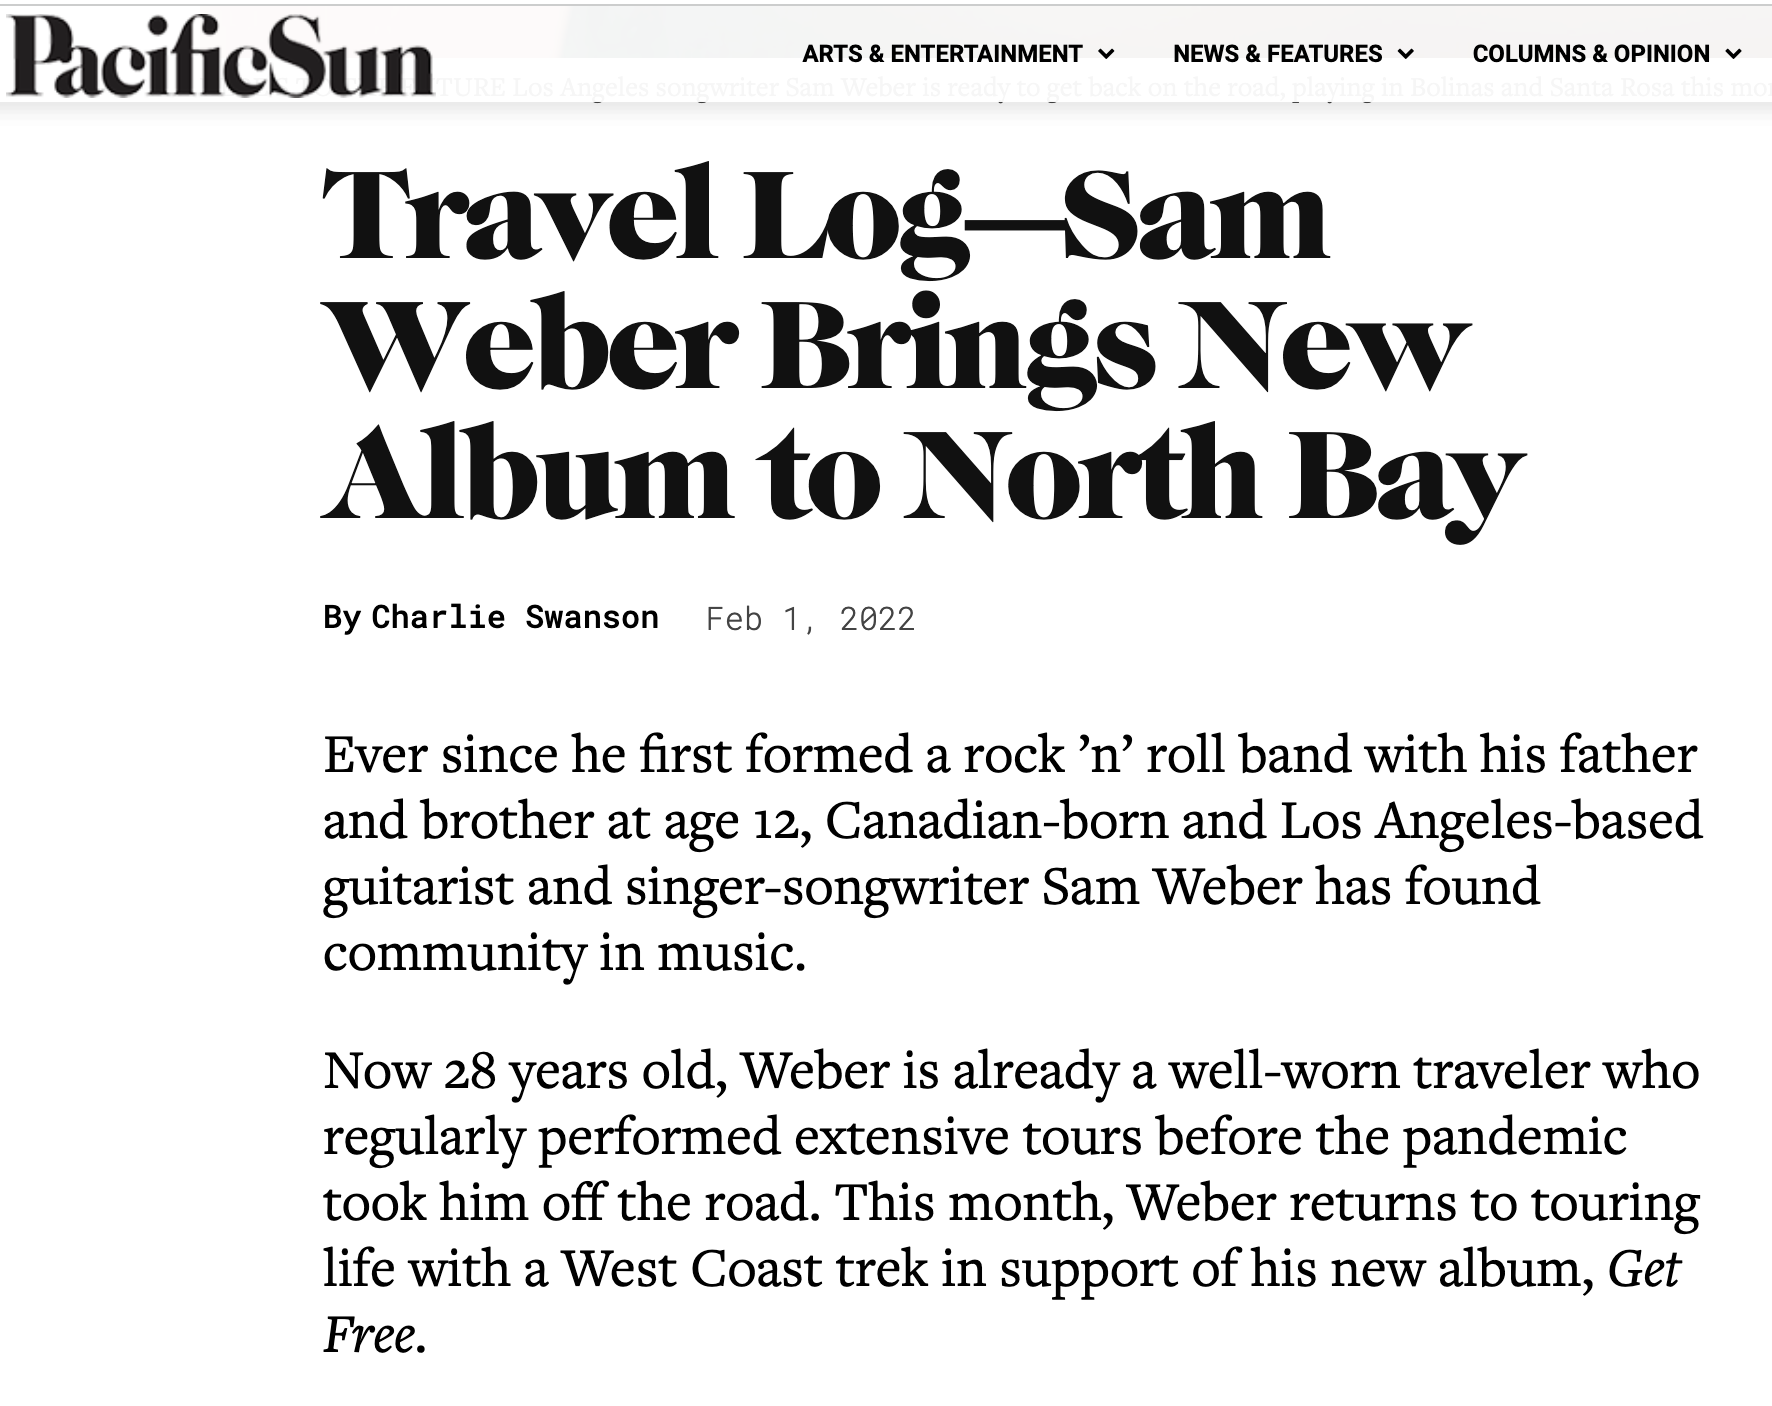 Sam Weber in the Pacific Sun